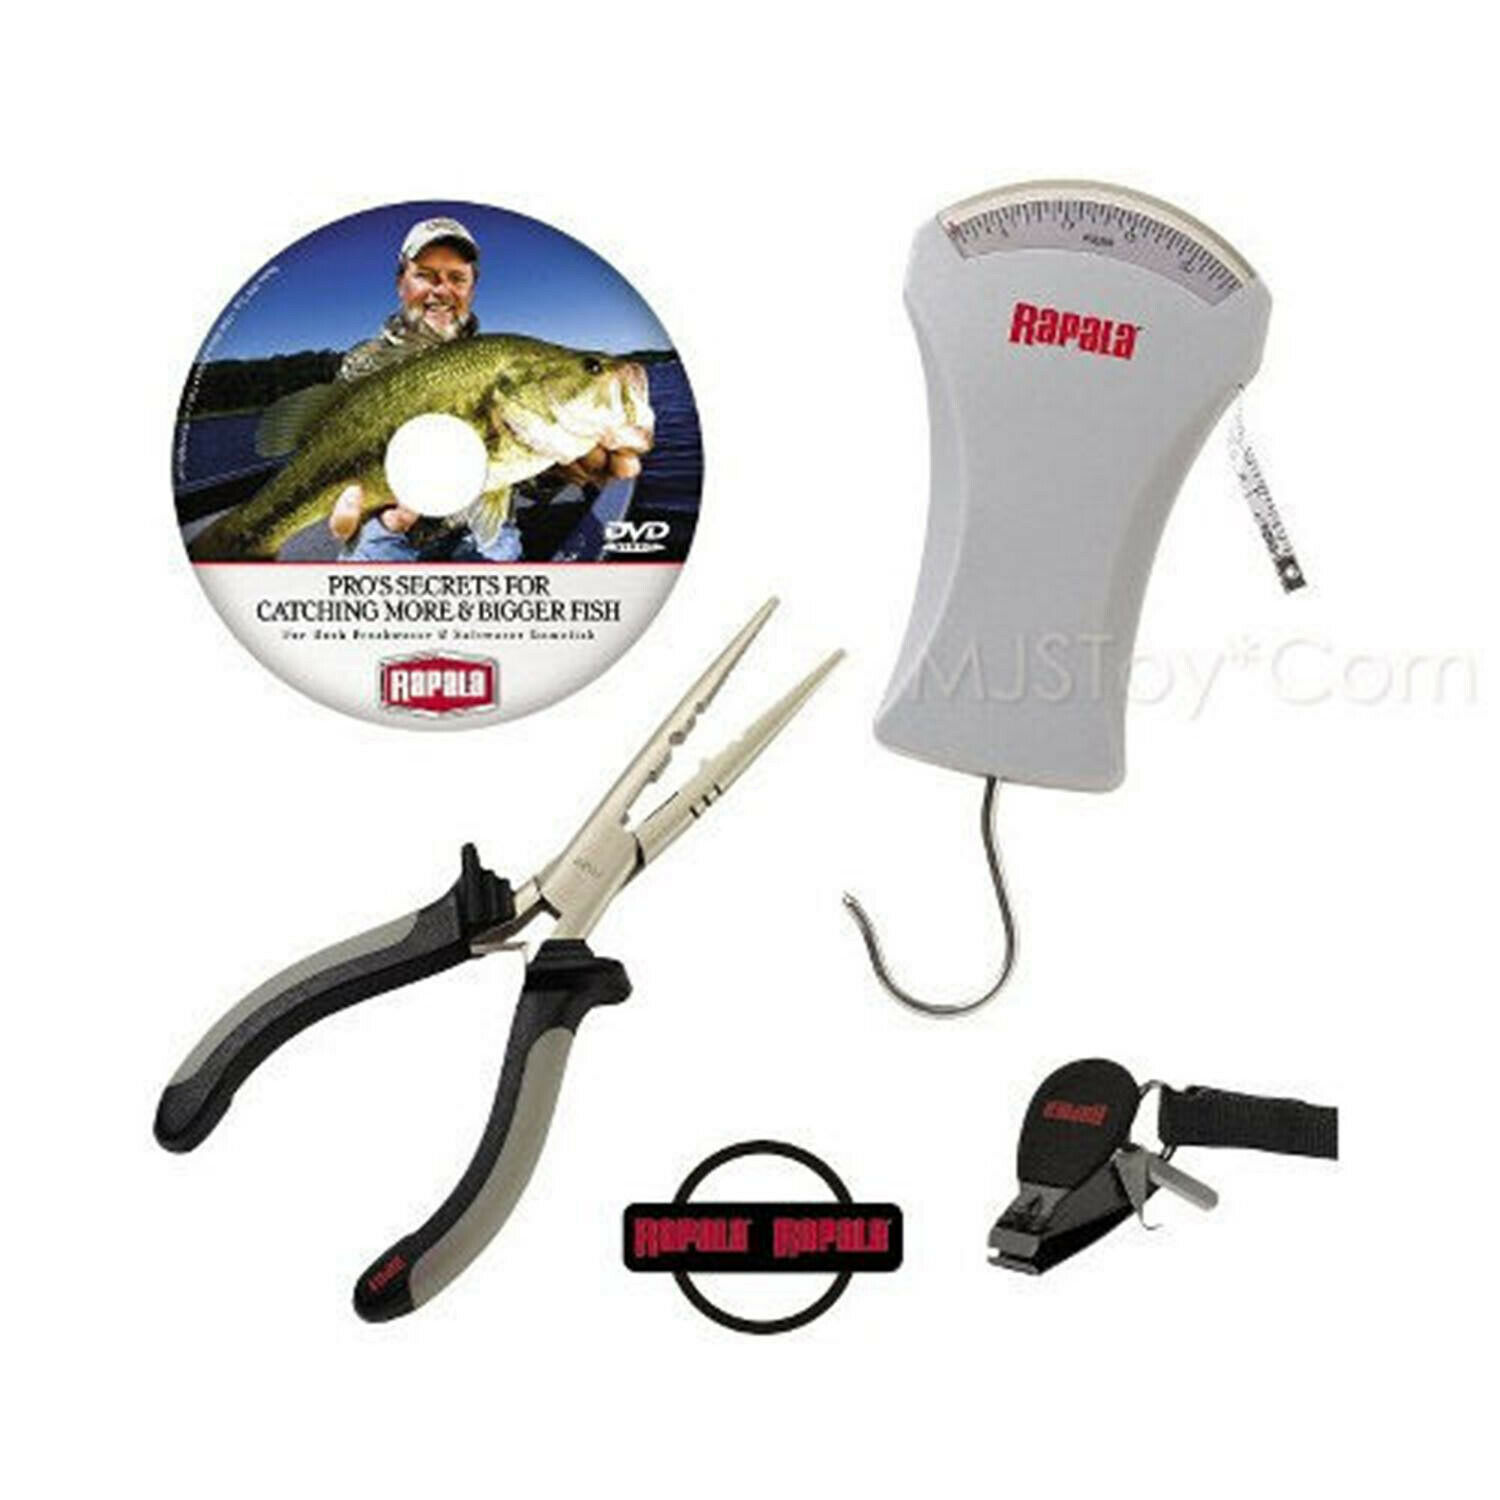 NEW Rapala Fishing Tool Combo Pro Catch Bigger Fish DVD Fisherman Plier Scale - $29.99